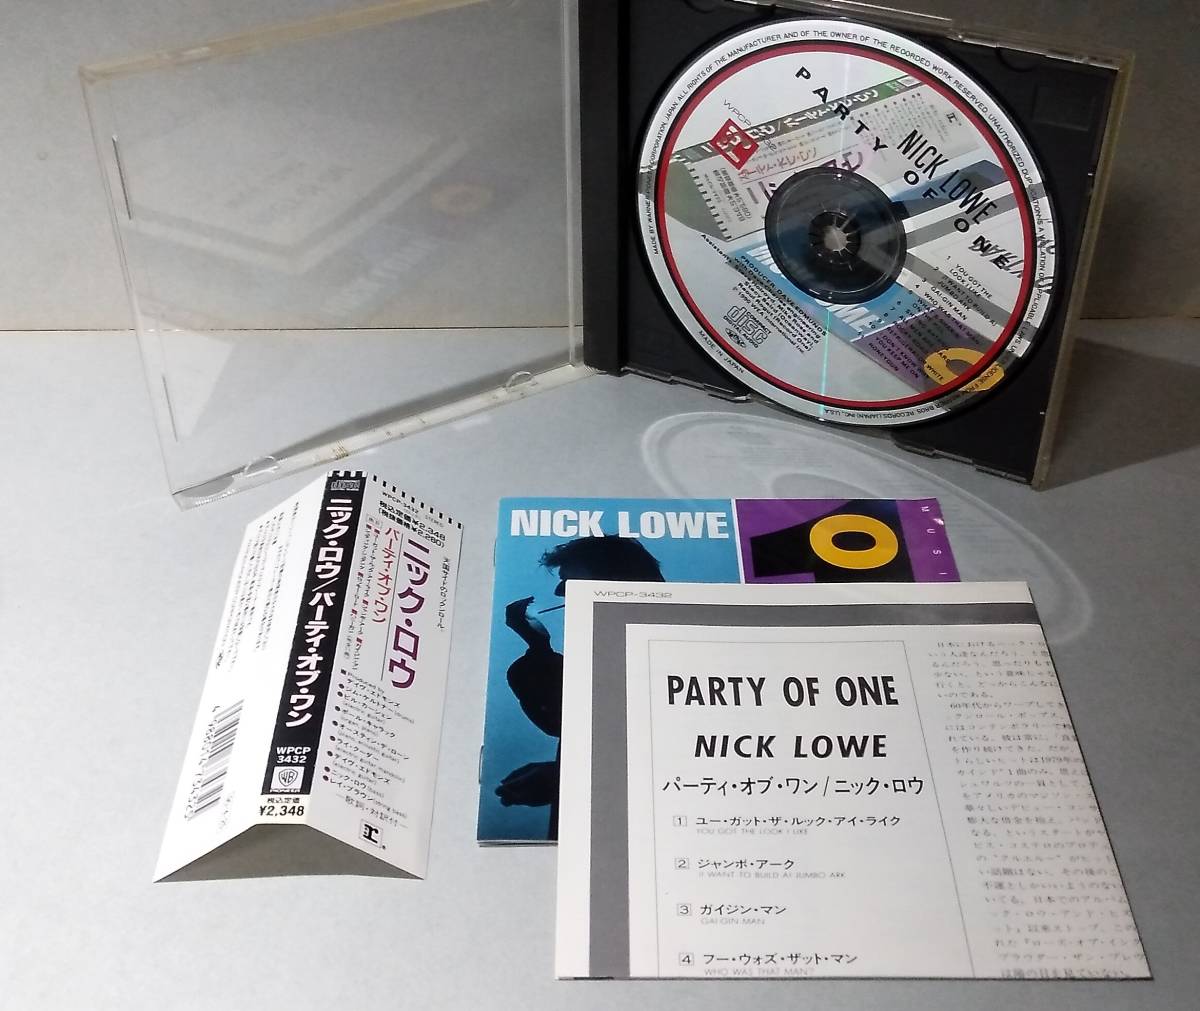 *nik* low [ вечеринка *ob* one ]NICK LOWE[ PARTY OF ONE ] * записано в Японии * с поясом оби *